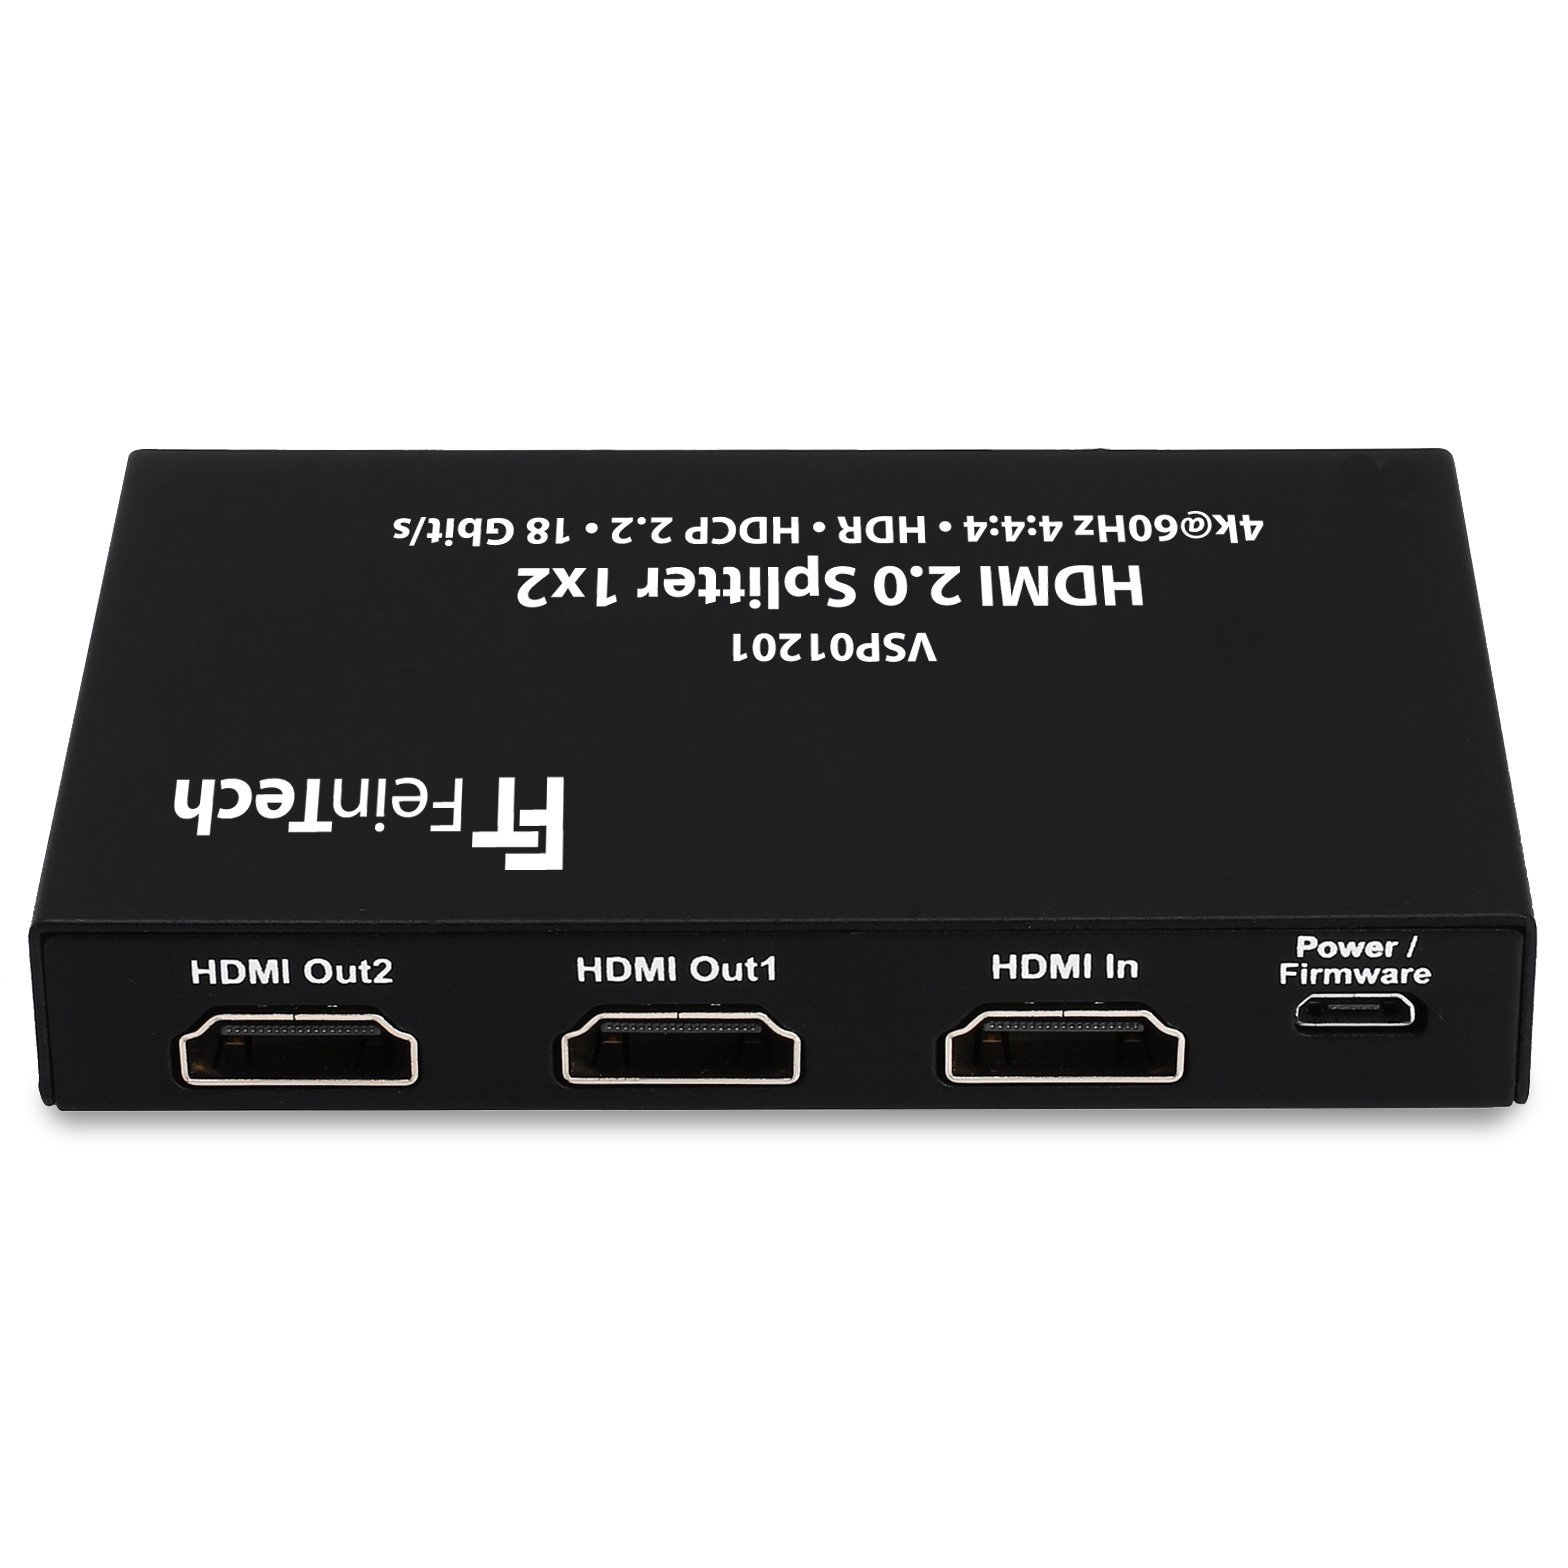 Splitter In 1 2 HDMI 2.0 4K 60Hz VSP01201 FEINTECH Out